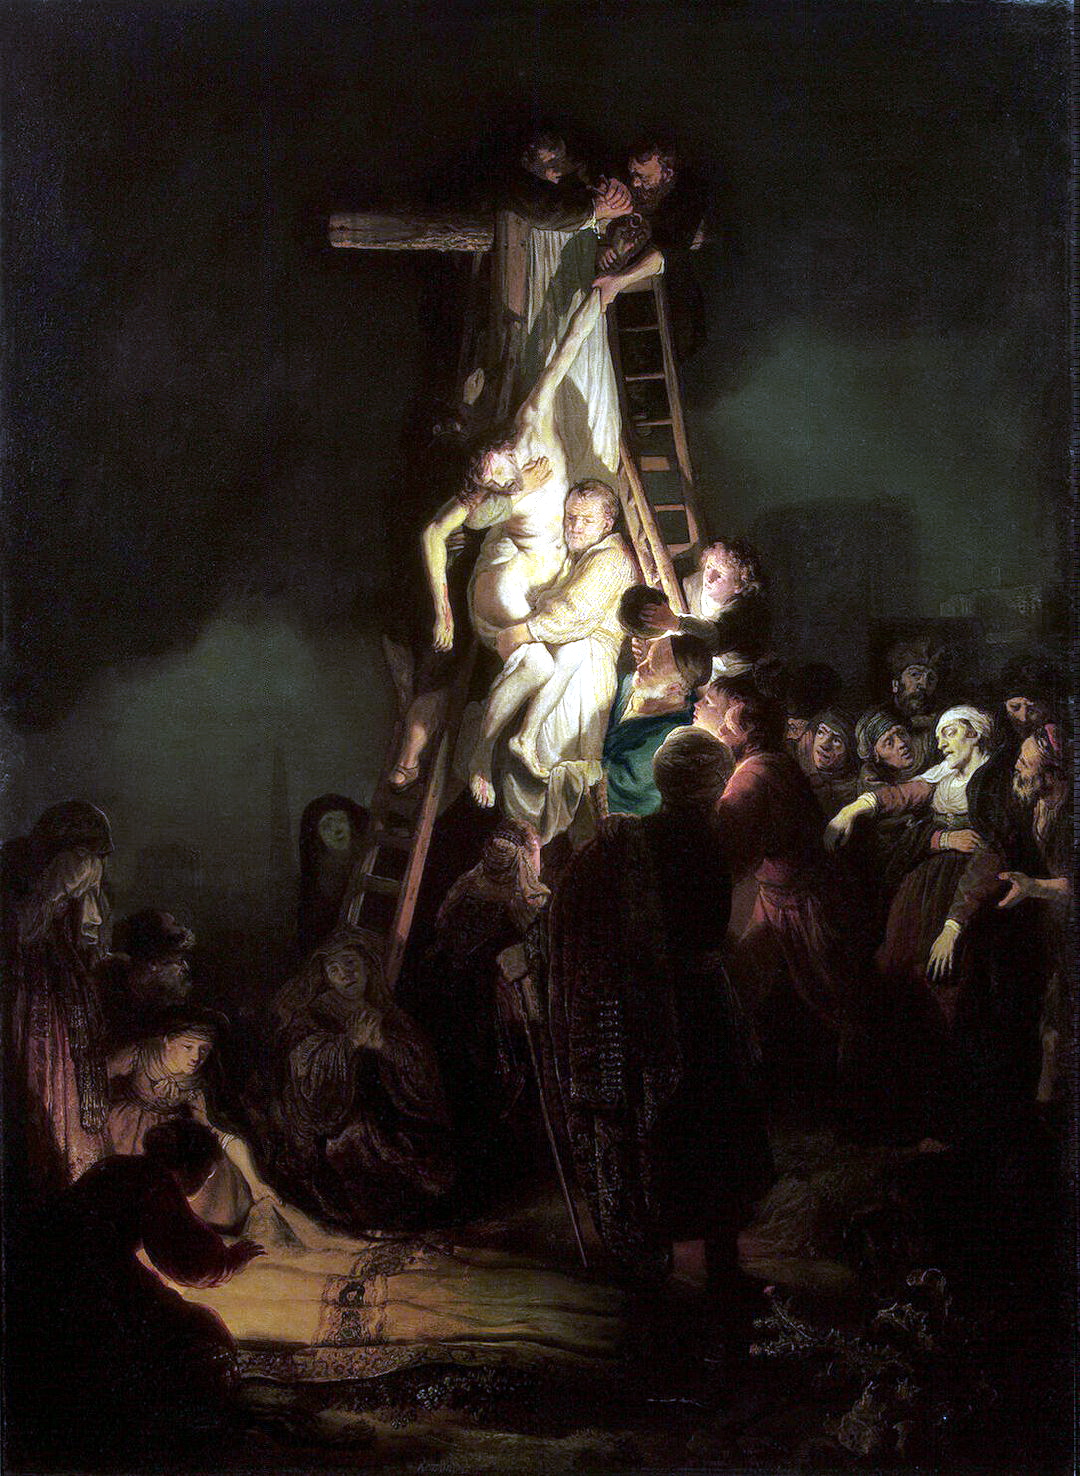 Рембрандт Харменс ван Рейн. "Снятие с креста". 1634. Эрмитаж, Санкт-Петербург.